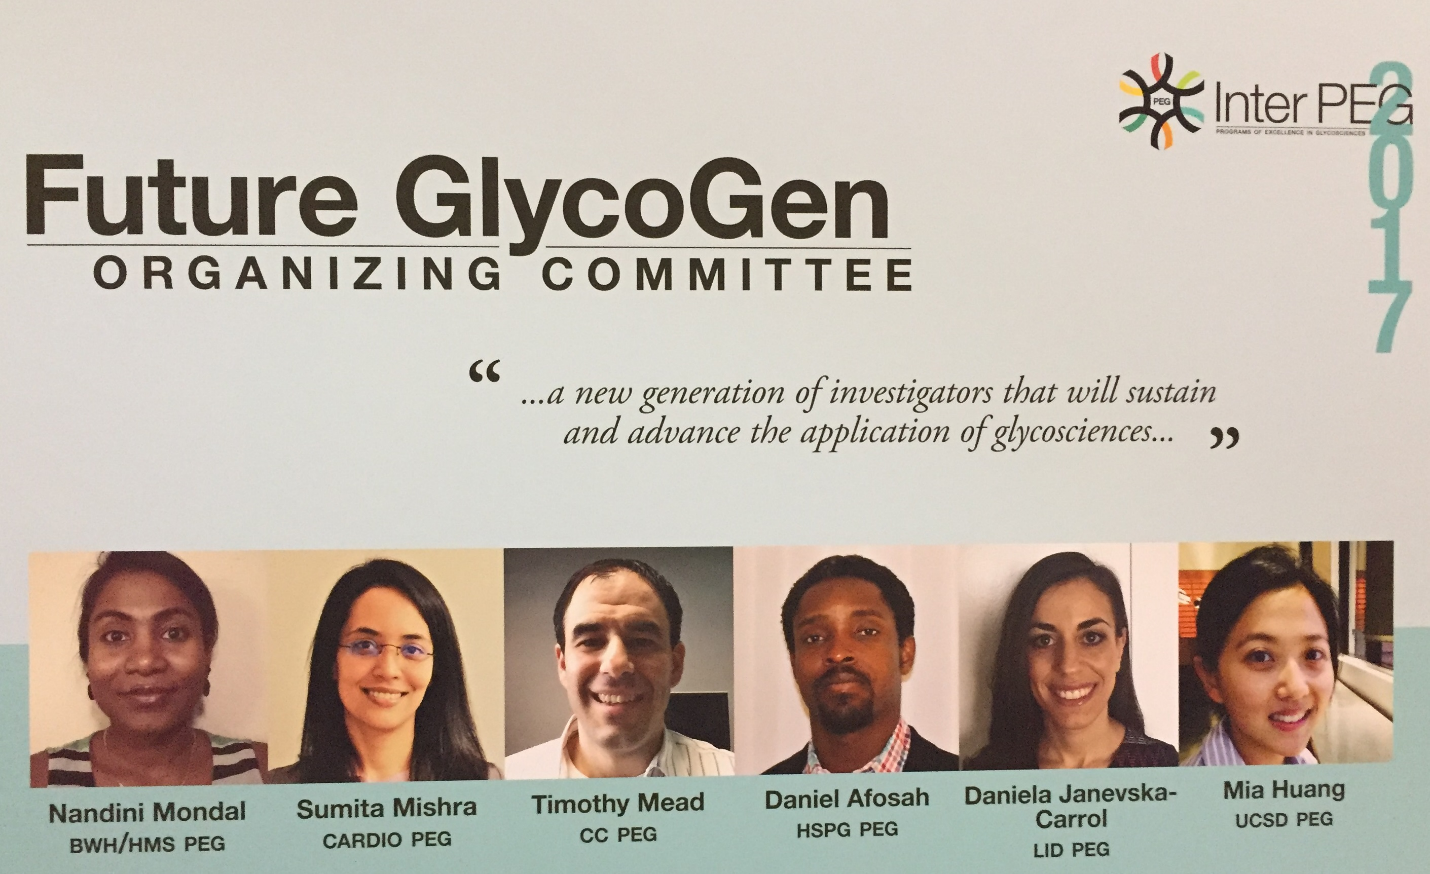 Daniel Afosah was named a Future Glycogen leader for the 2017 InterPEG conference.